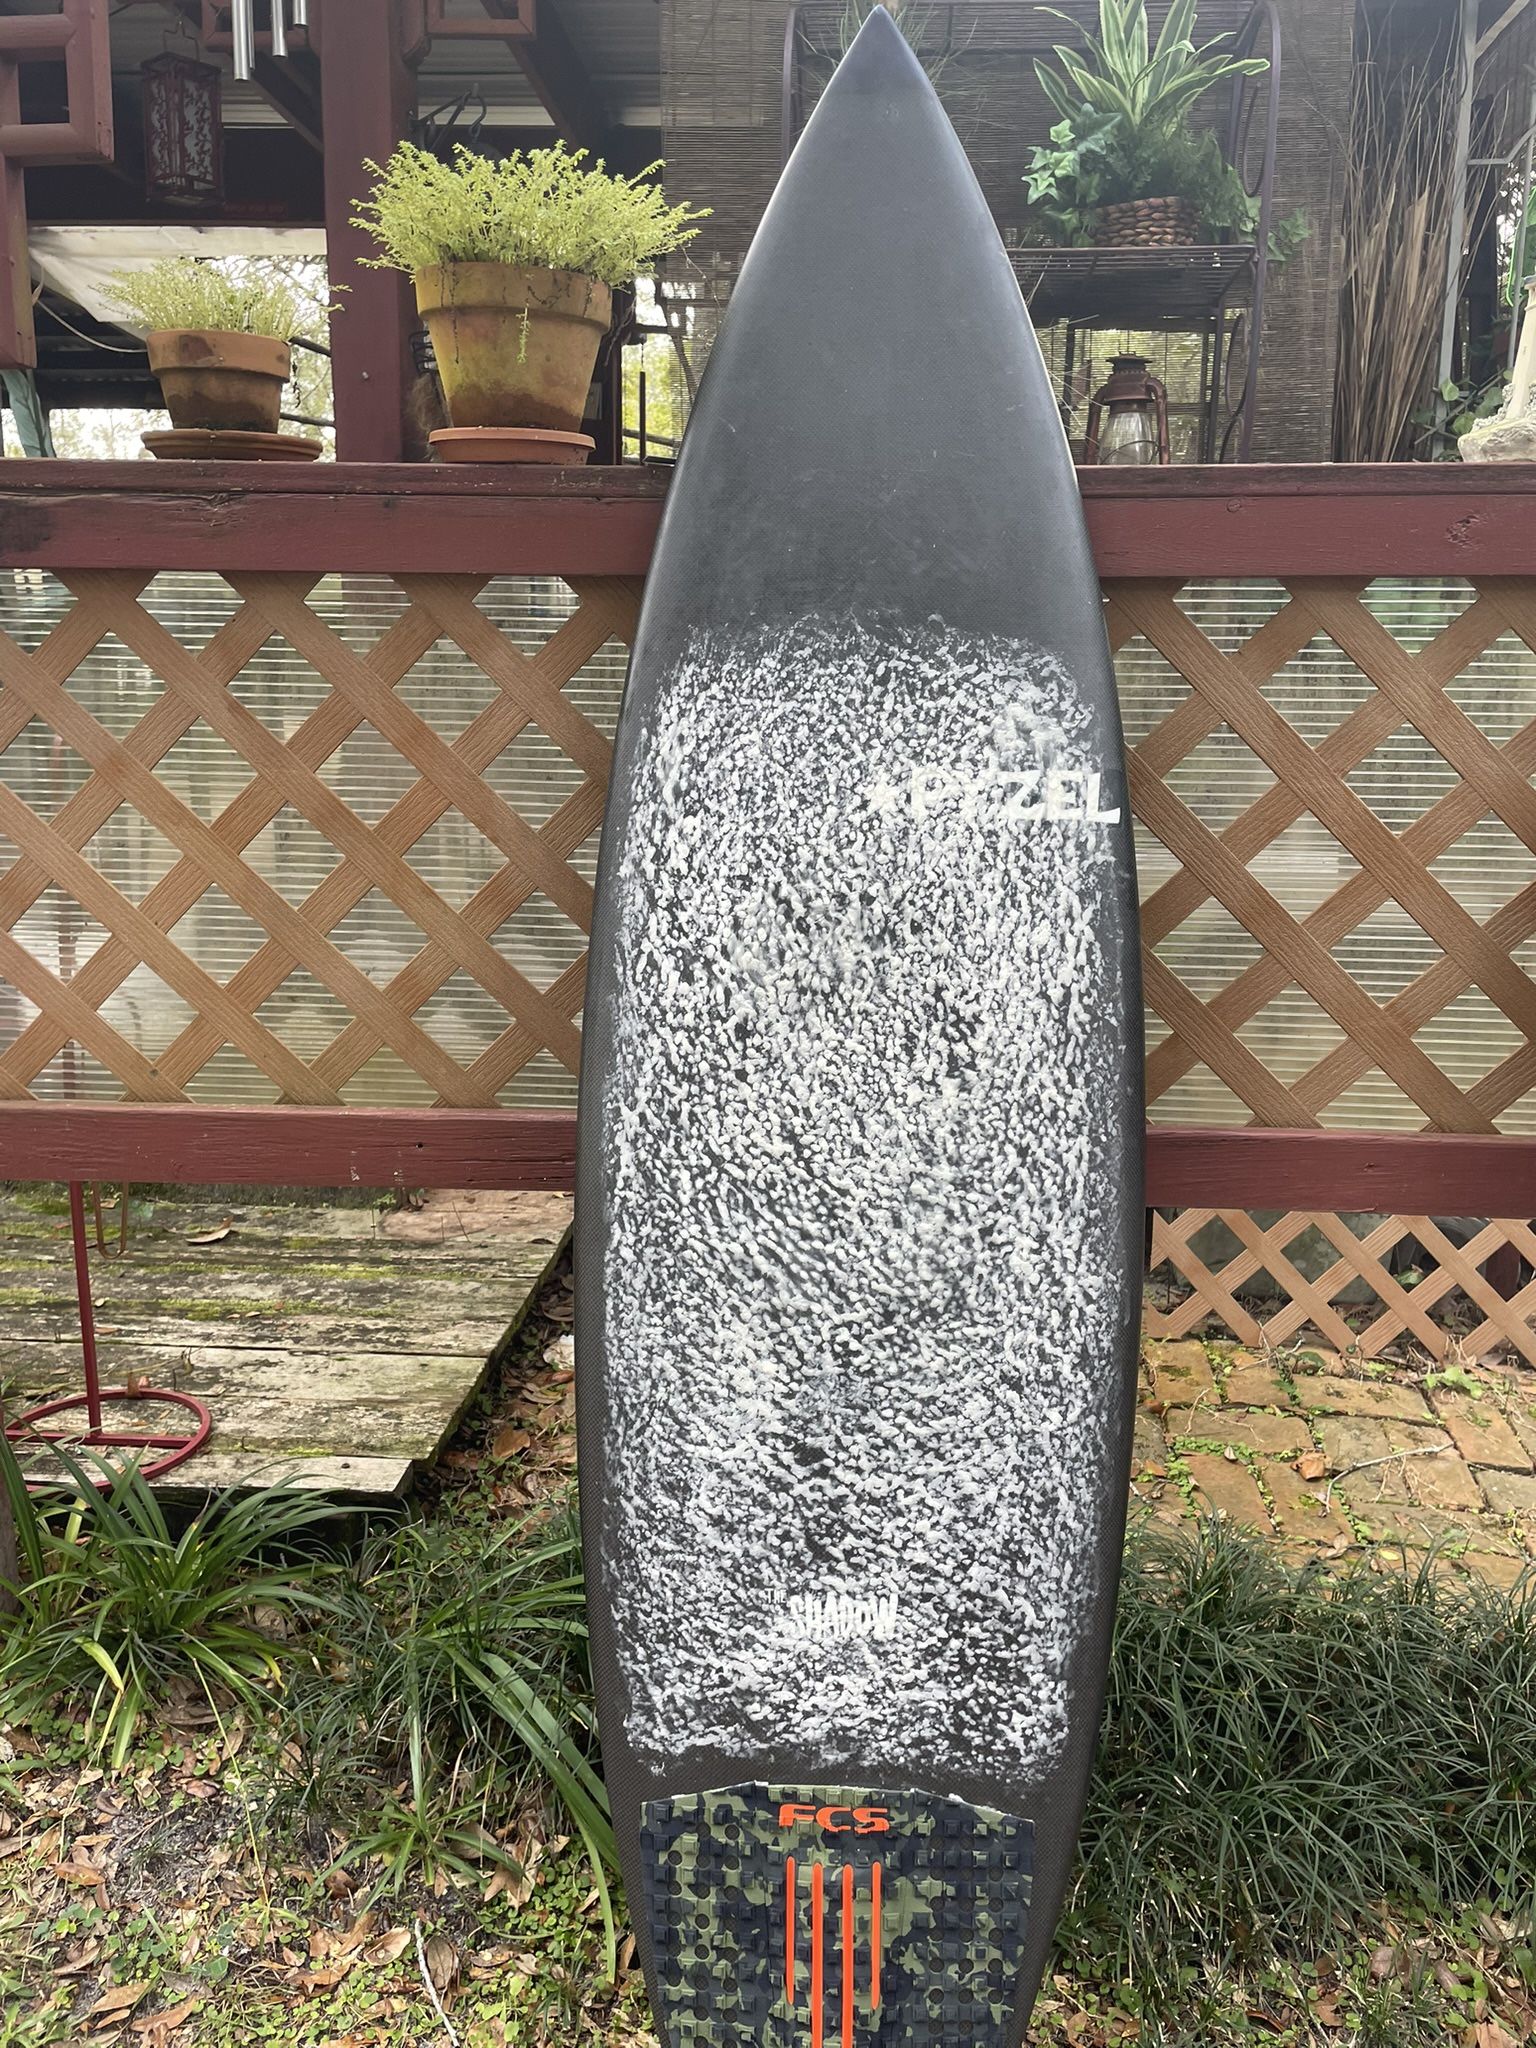 Pyzel 5’9 Dark Arts Surfboard 